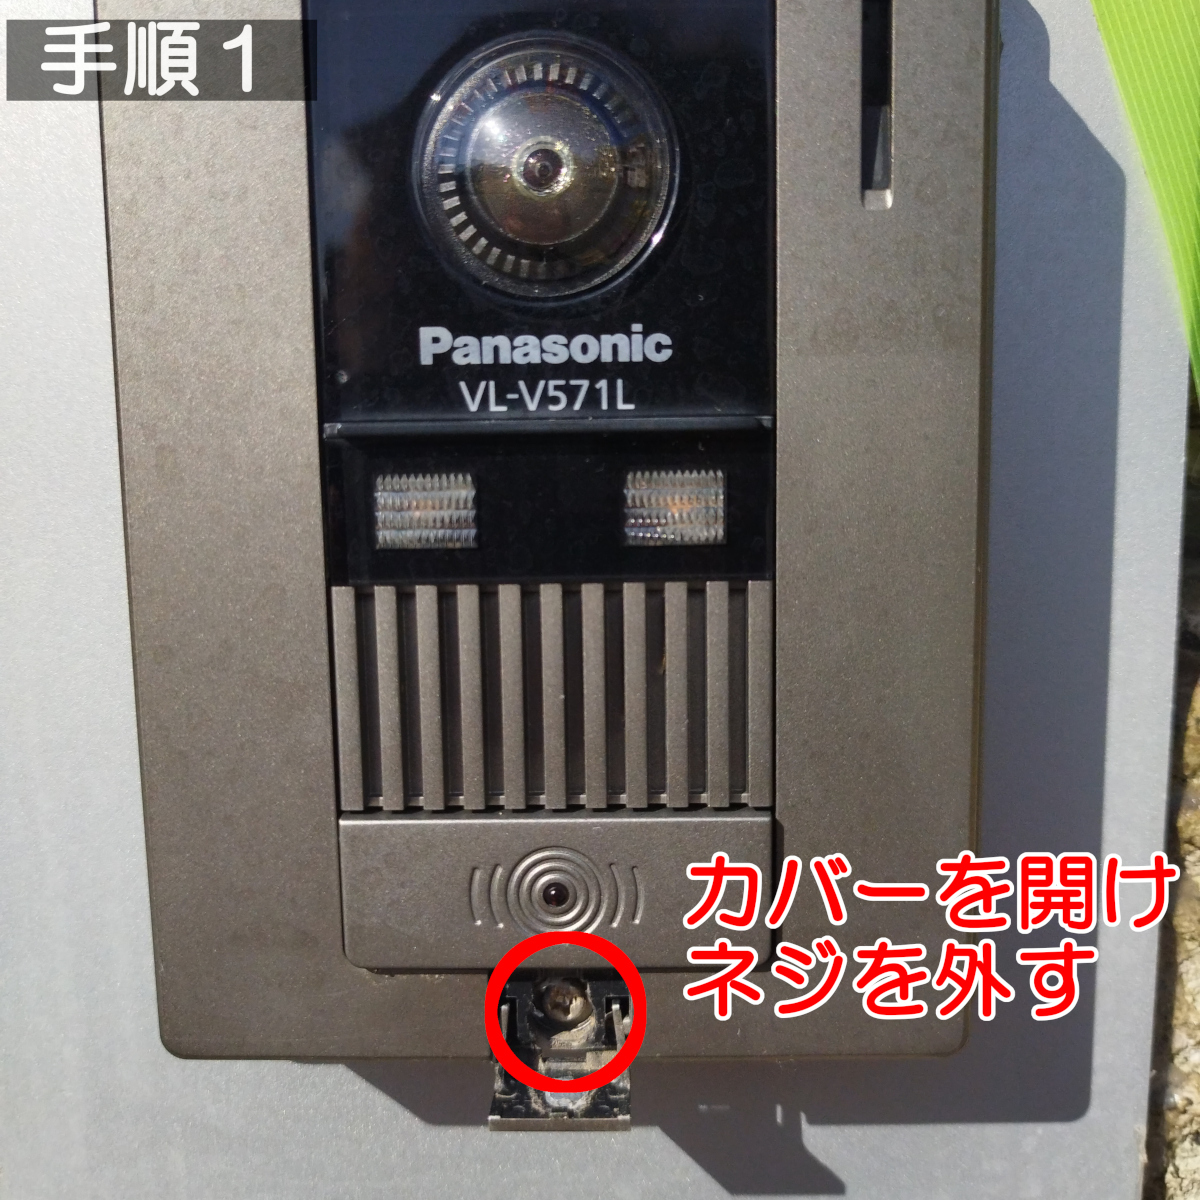 Panasonic パナソニック ドアホン VL-V571 交換用レンズ 【ドアホン